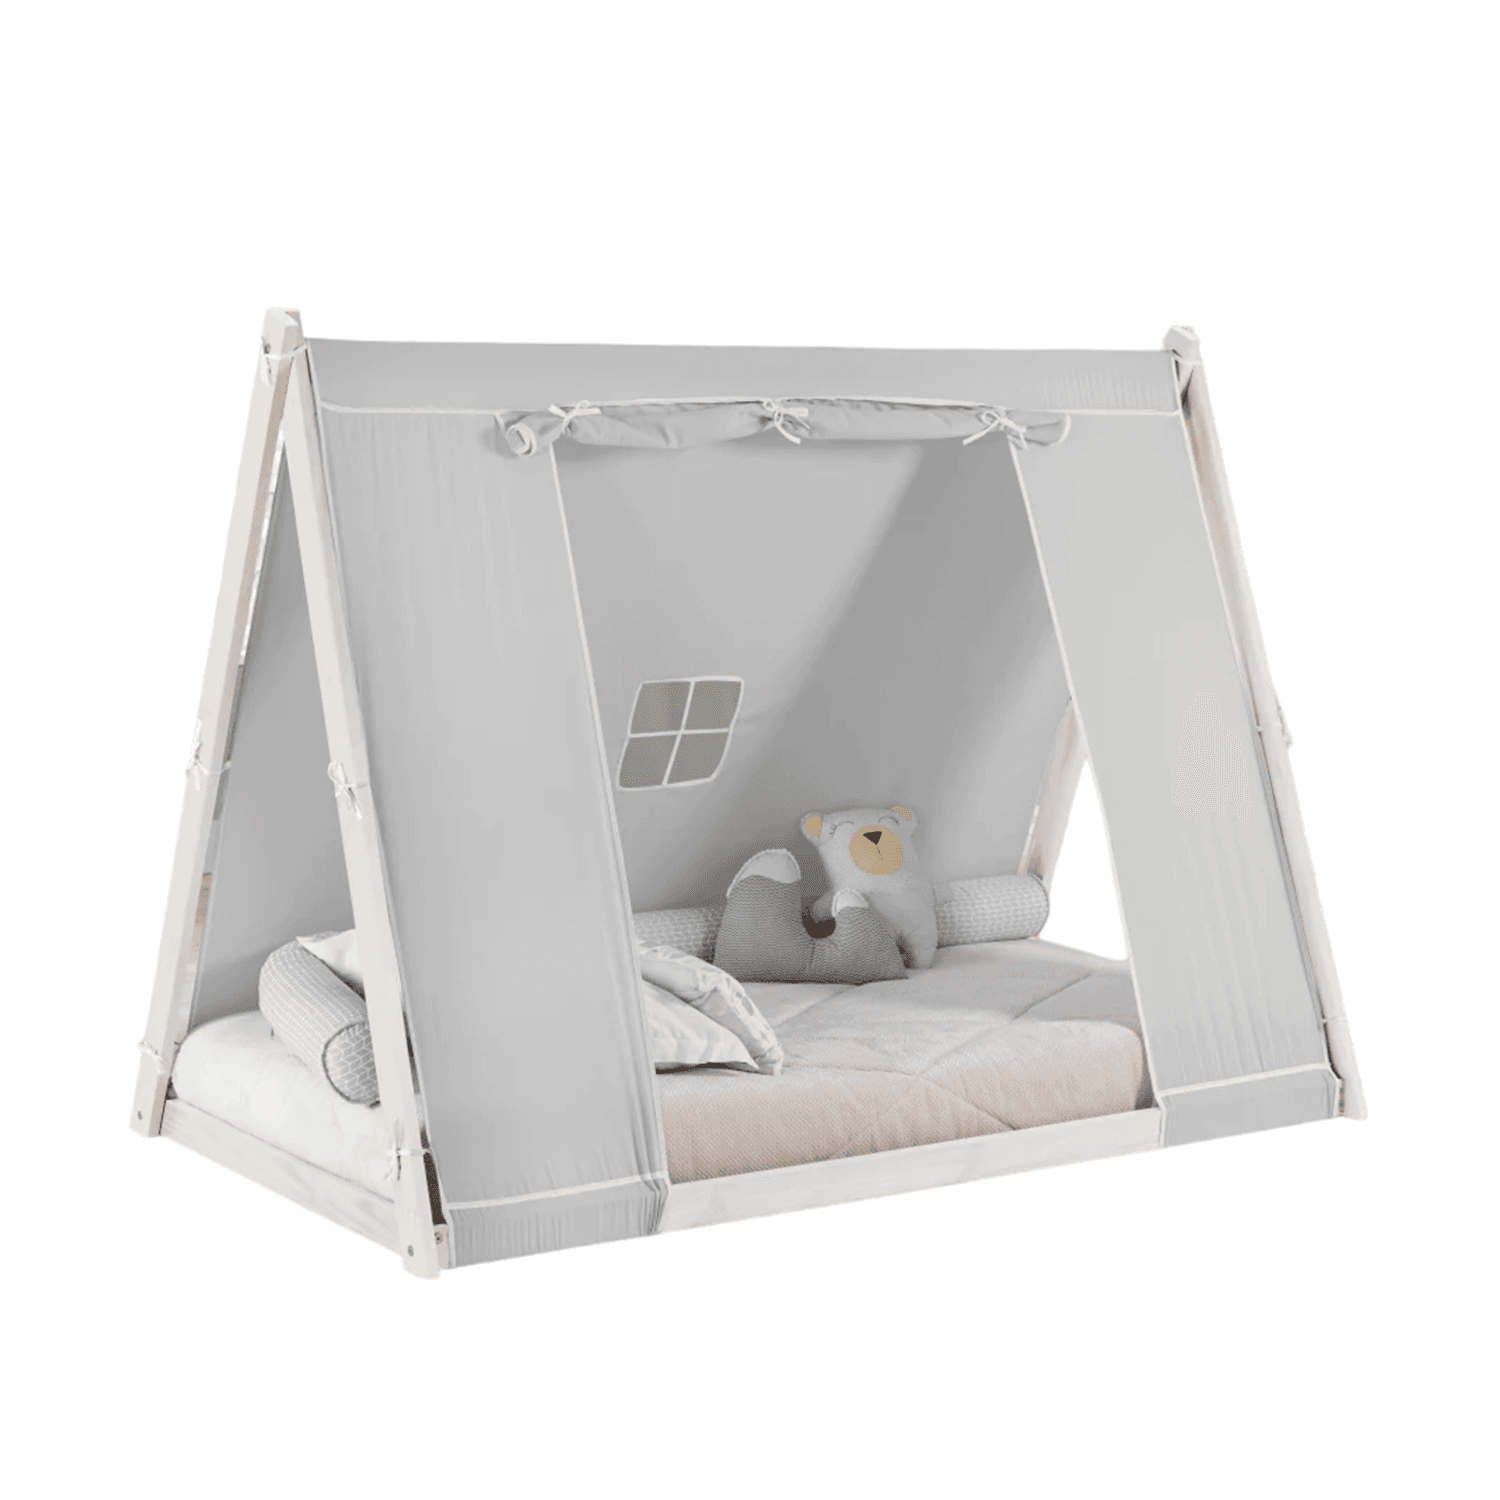 Montessori P'kolino Floor Bed Gray Tent With White Frame